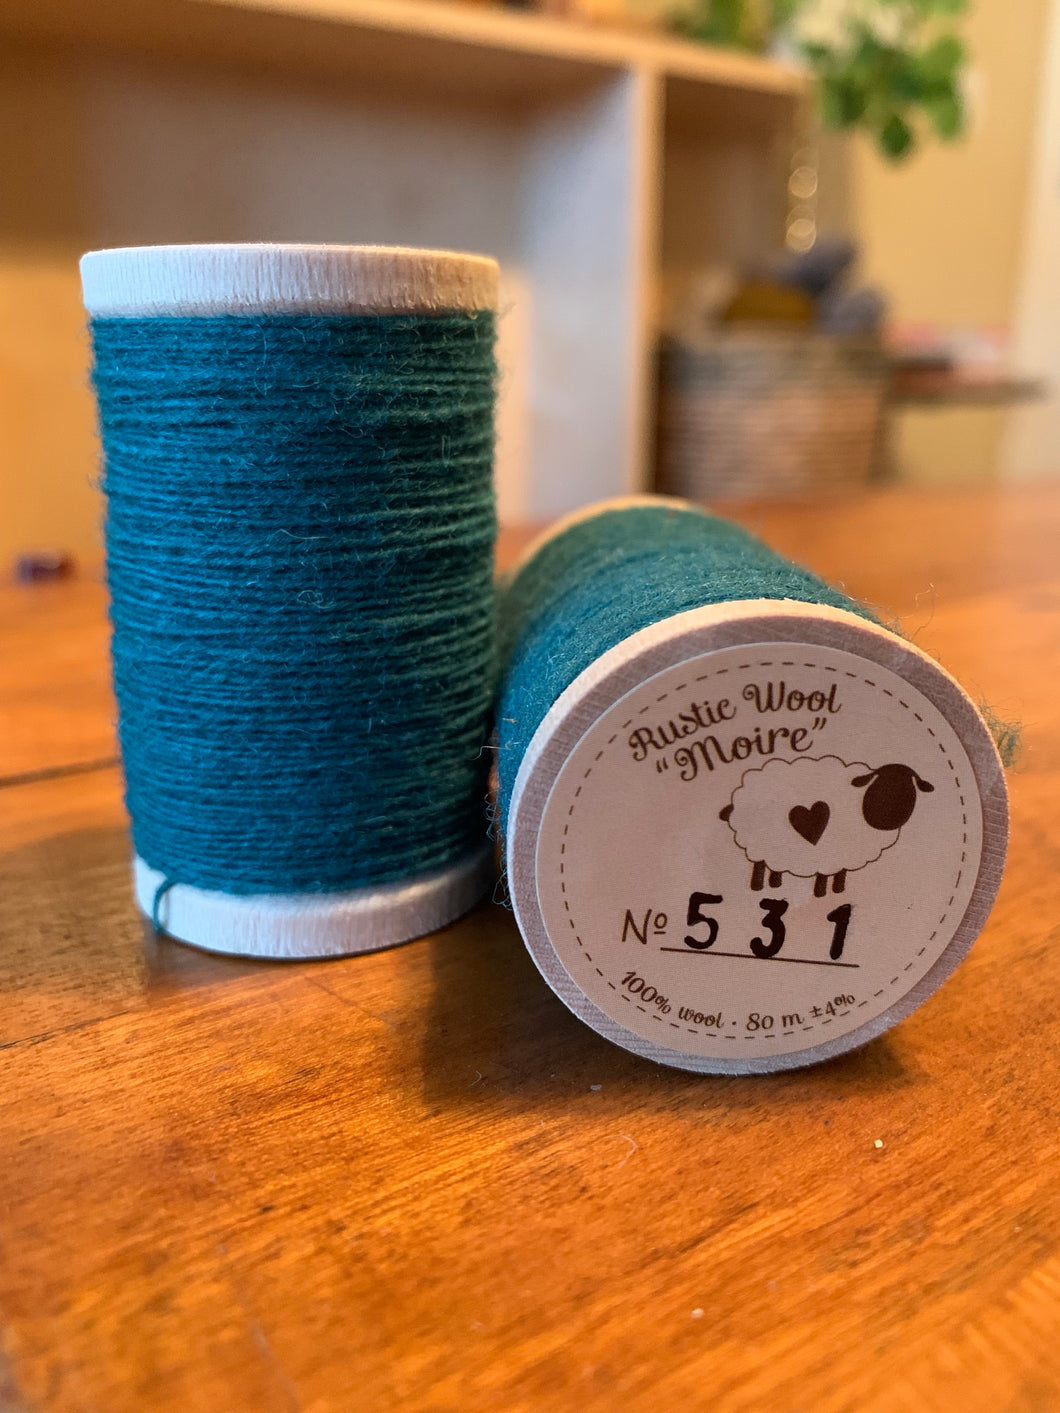 Rustic Wool Threads #531